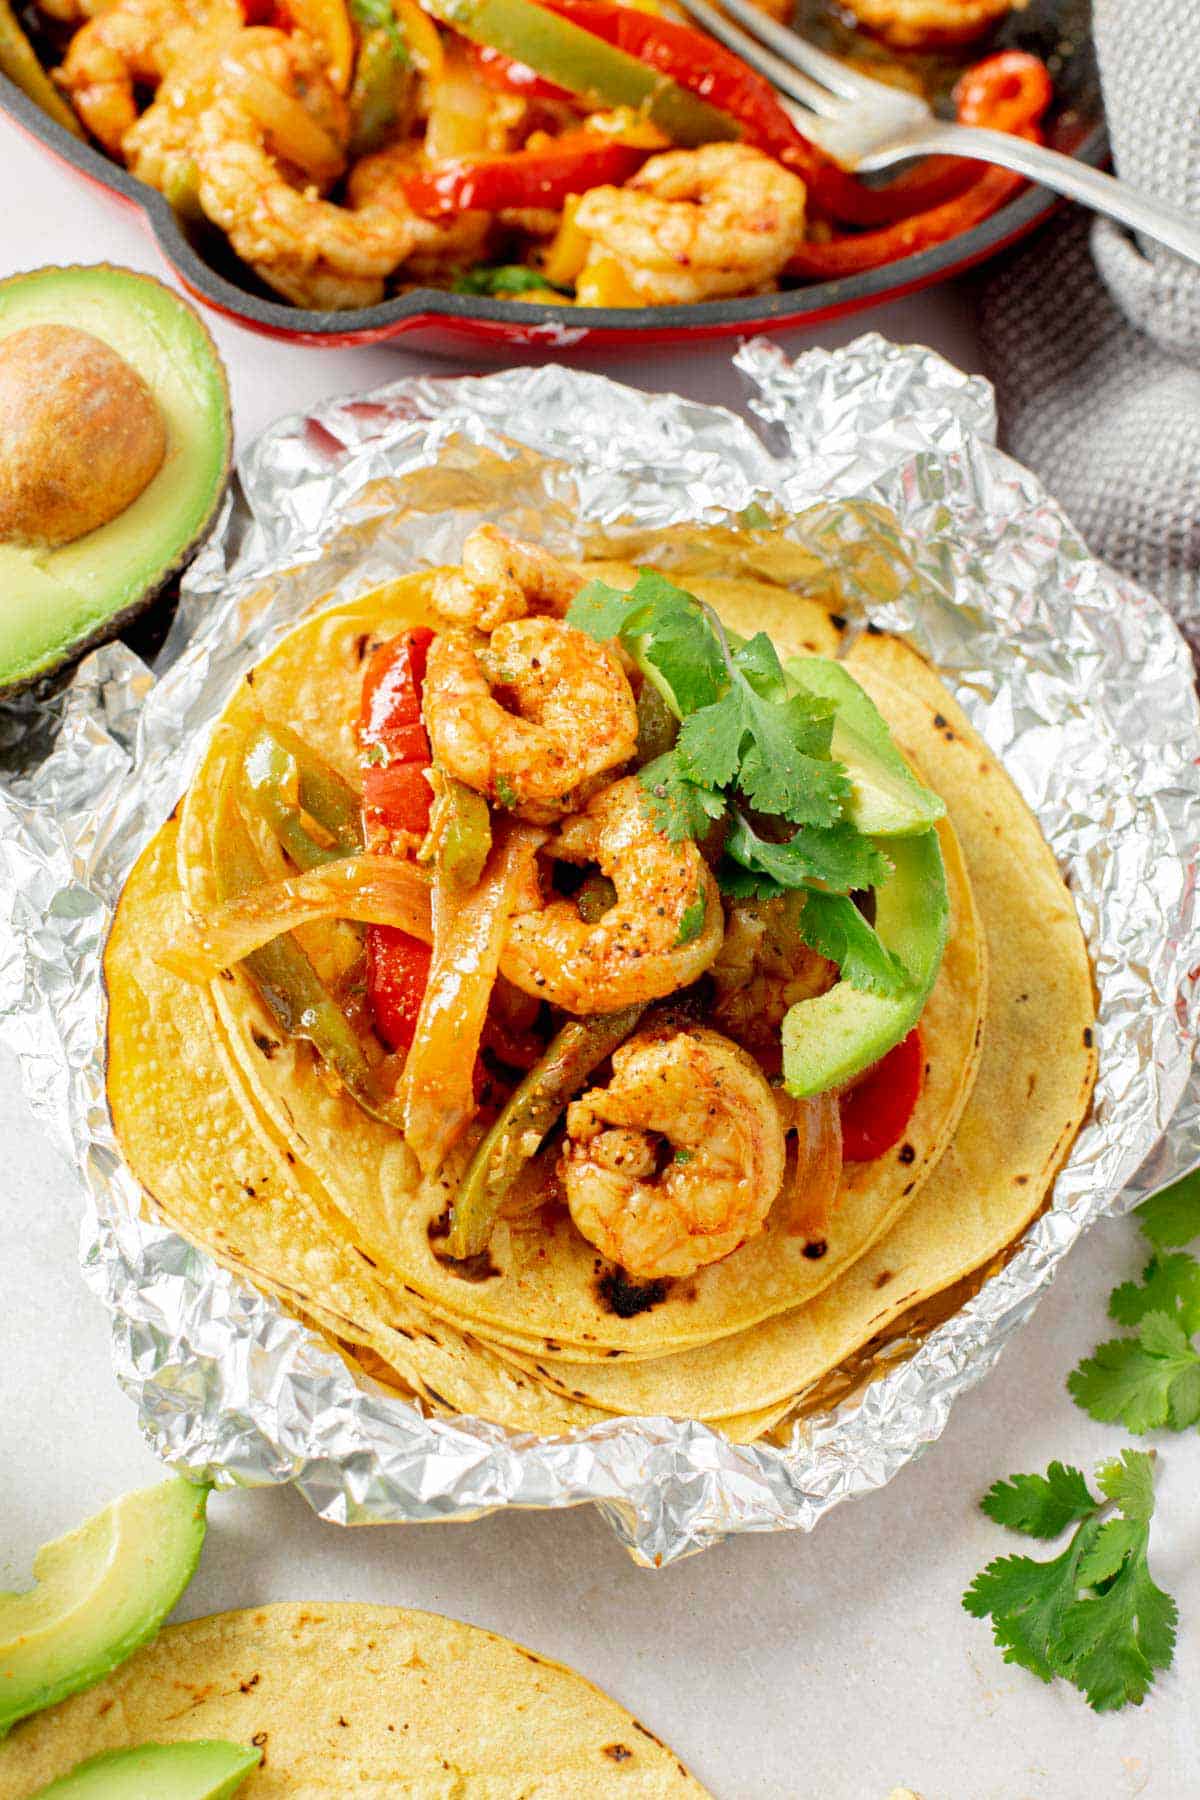 shrimp fajita with vegetables served in a corn tortilla ona foil